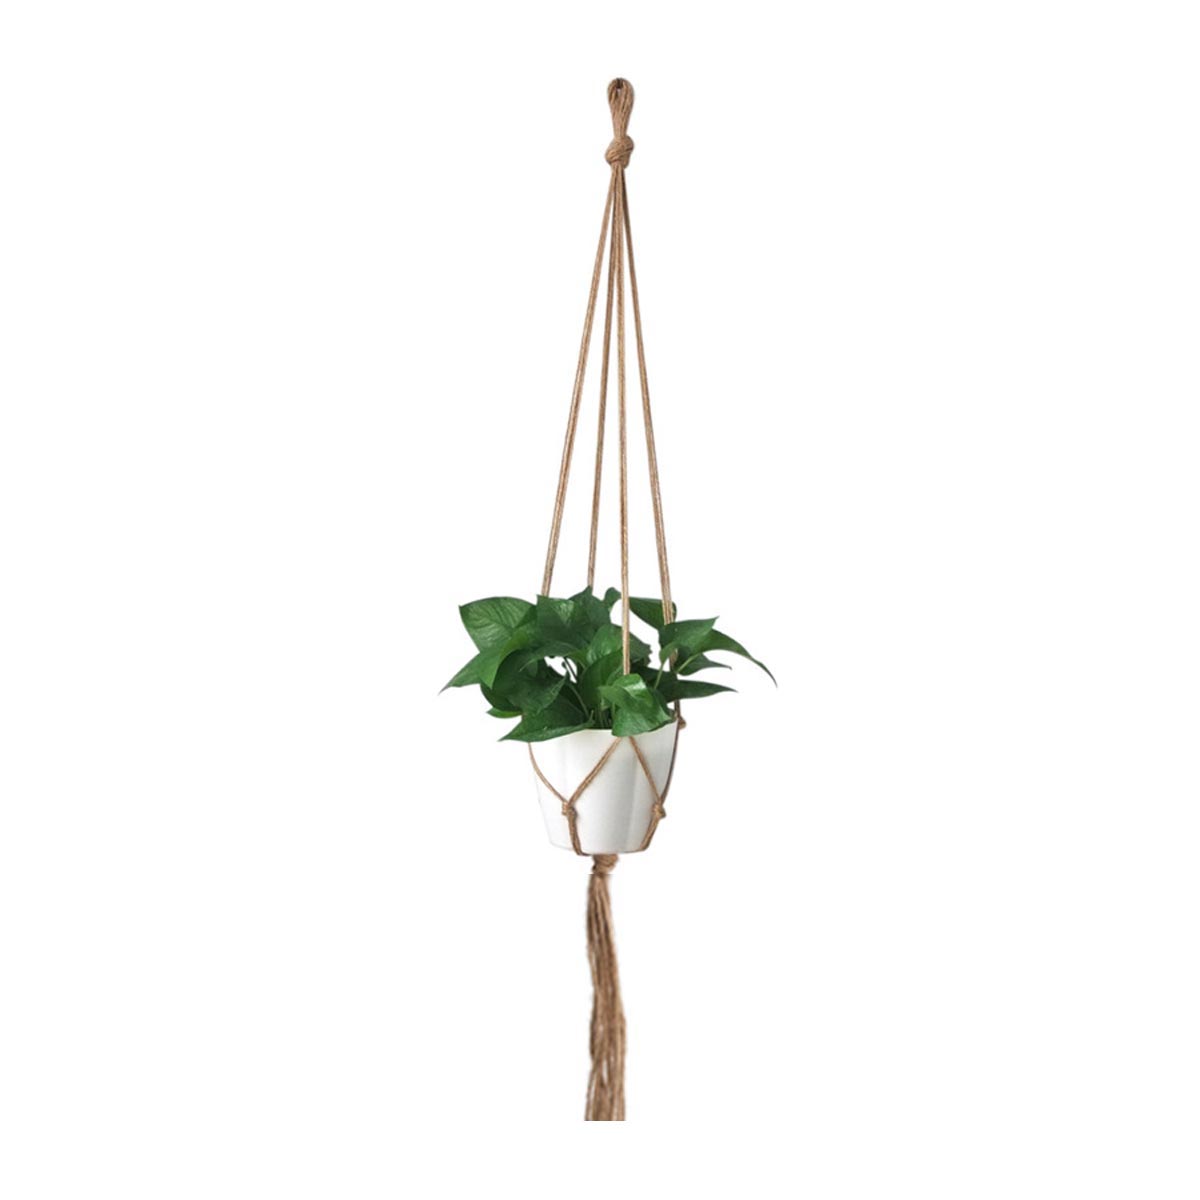 4x//Set Garden Plant Hanger Macrame Hanging Planter Basket Rope Flower Pot Holder